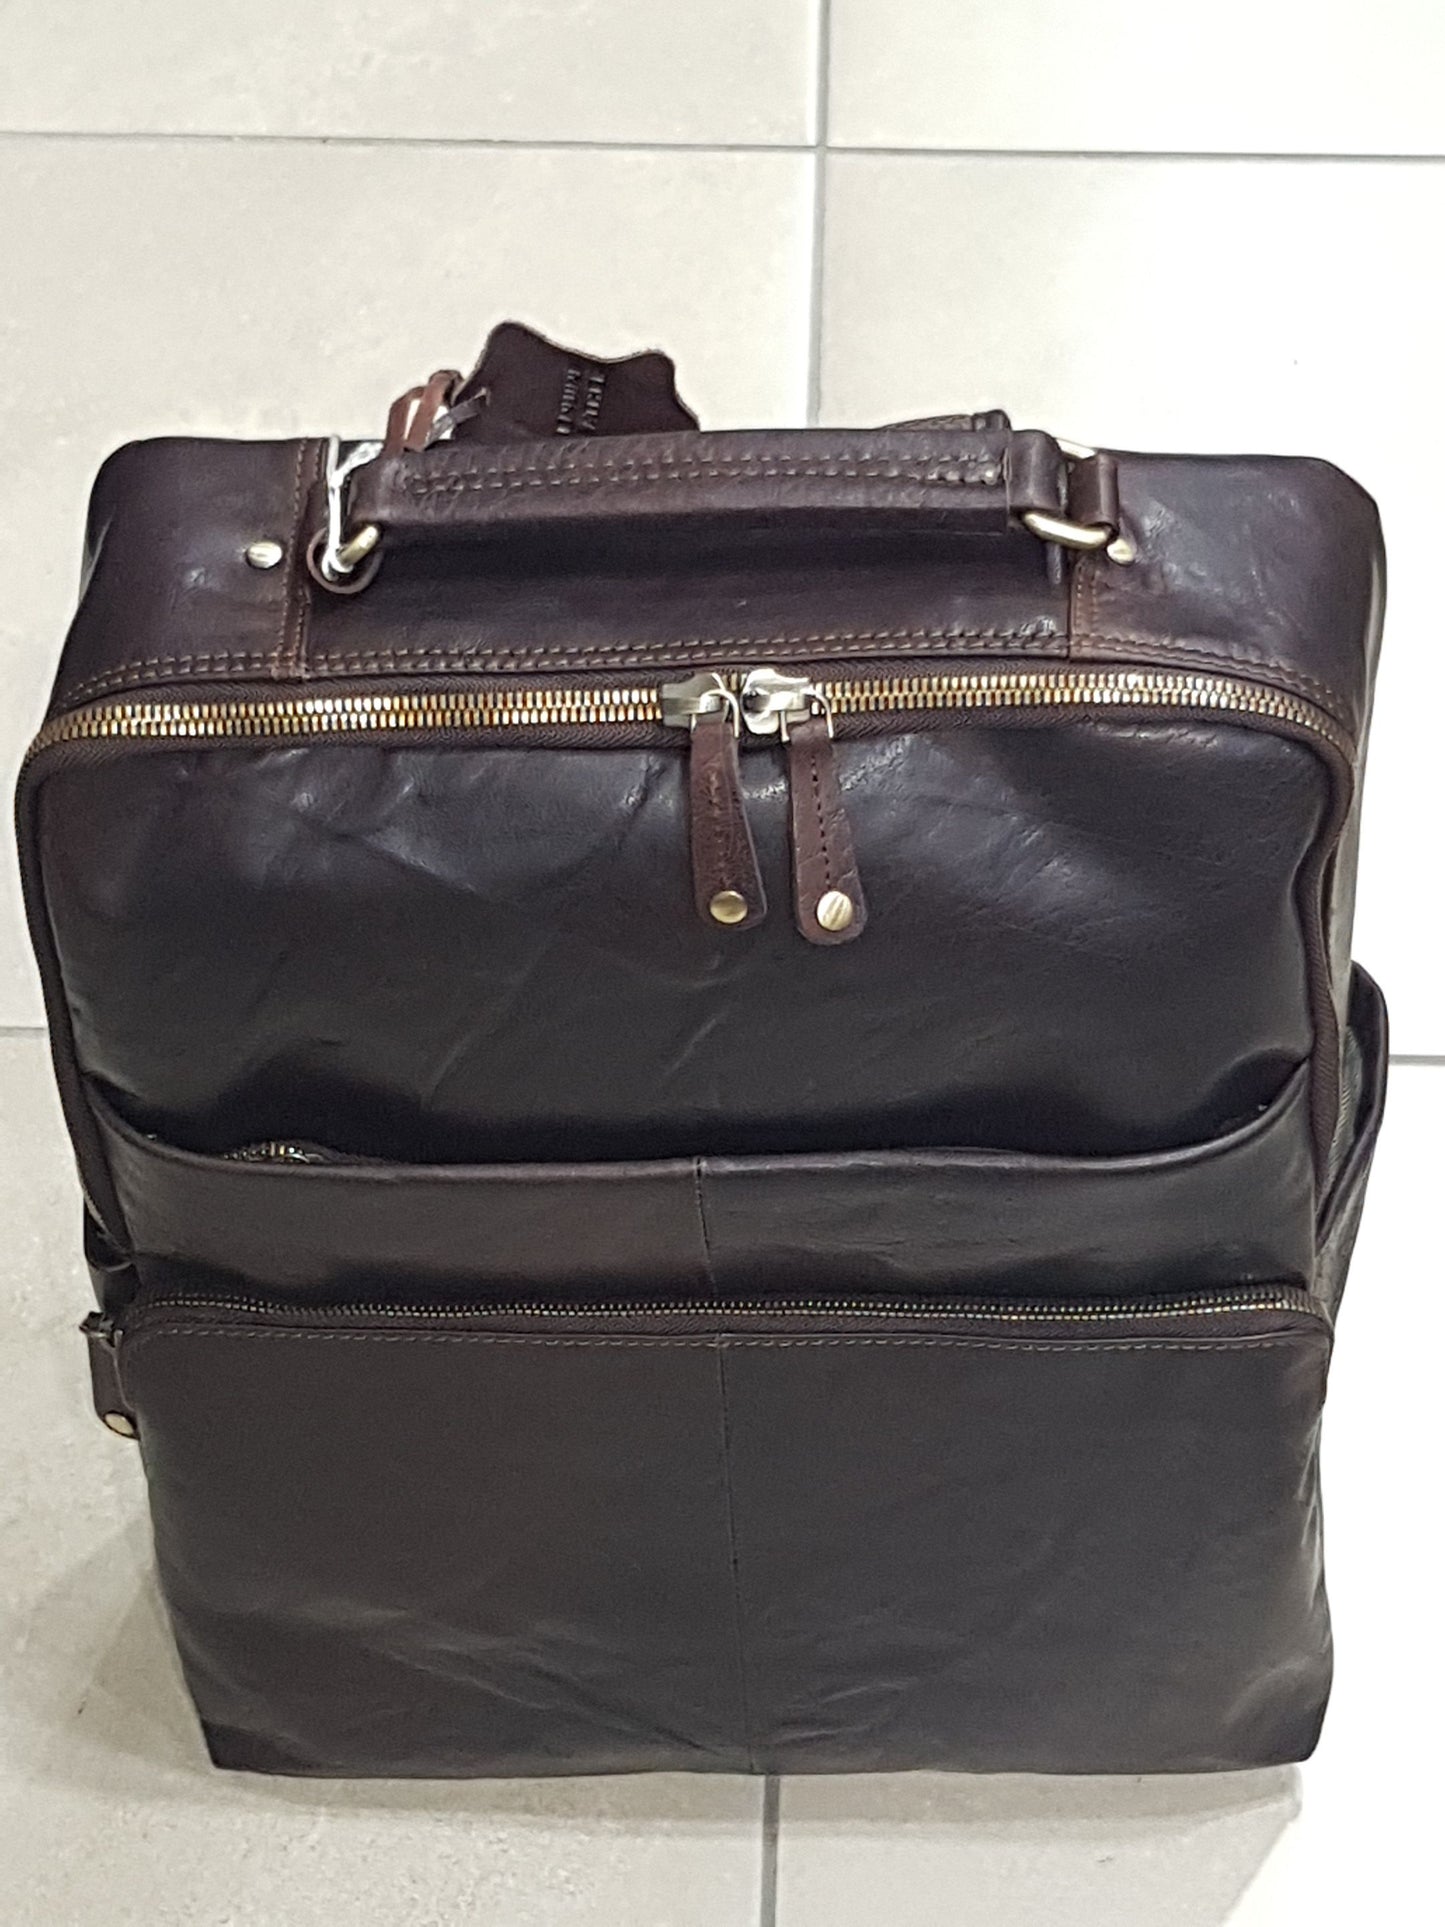 Oran Samuel Leather Laptop Travel Backpack - Brown